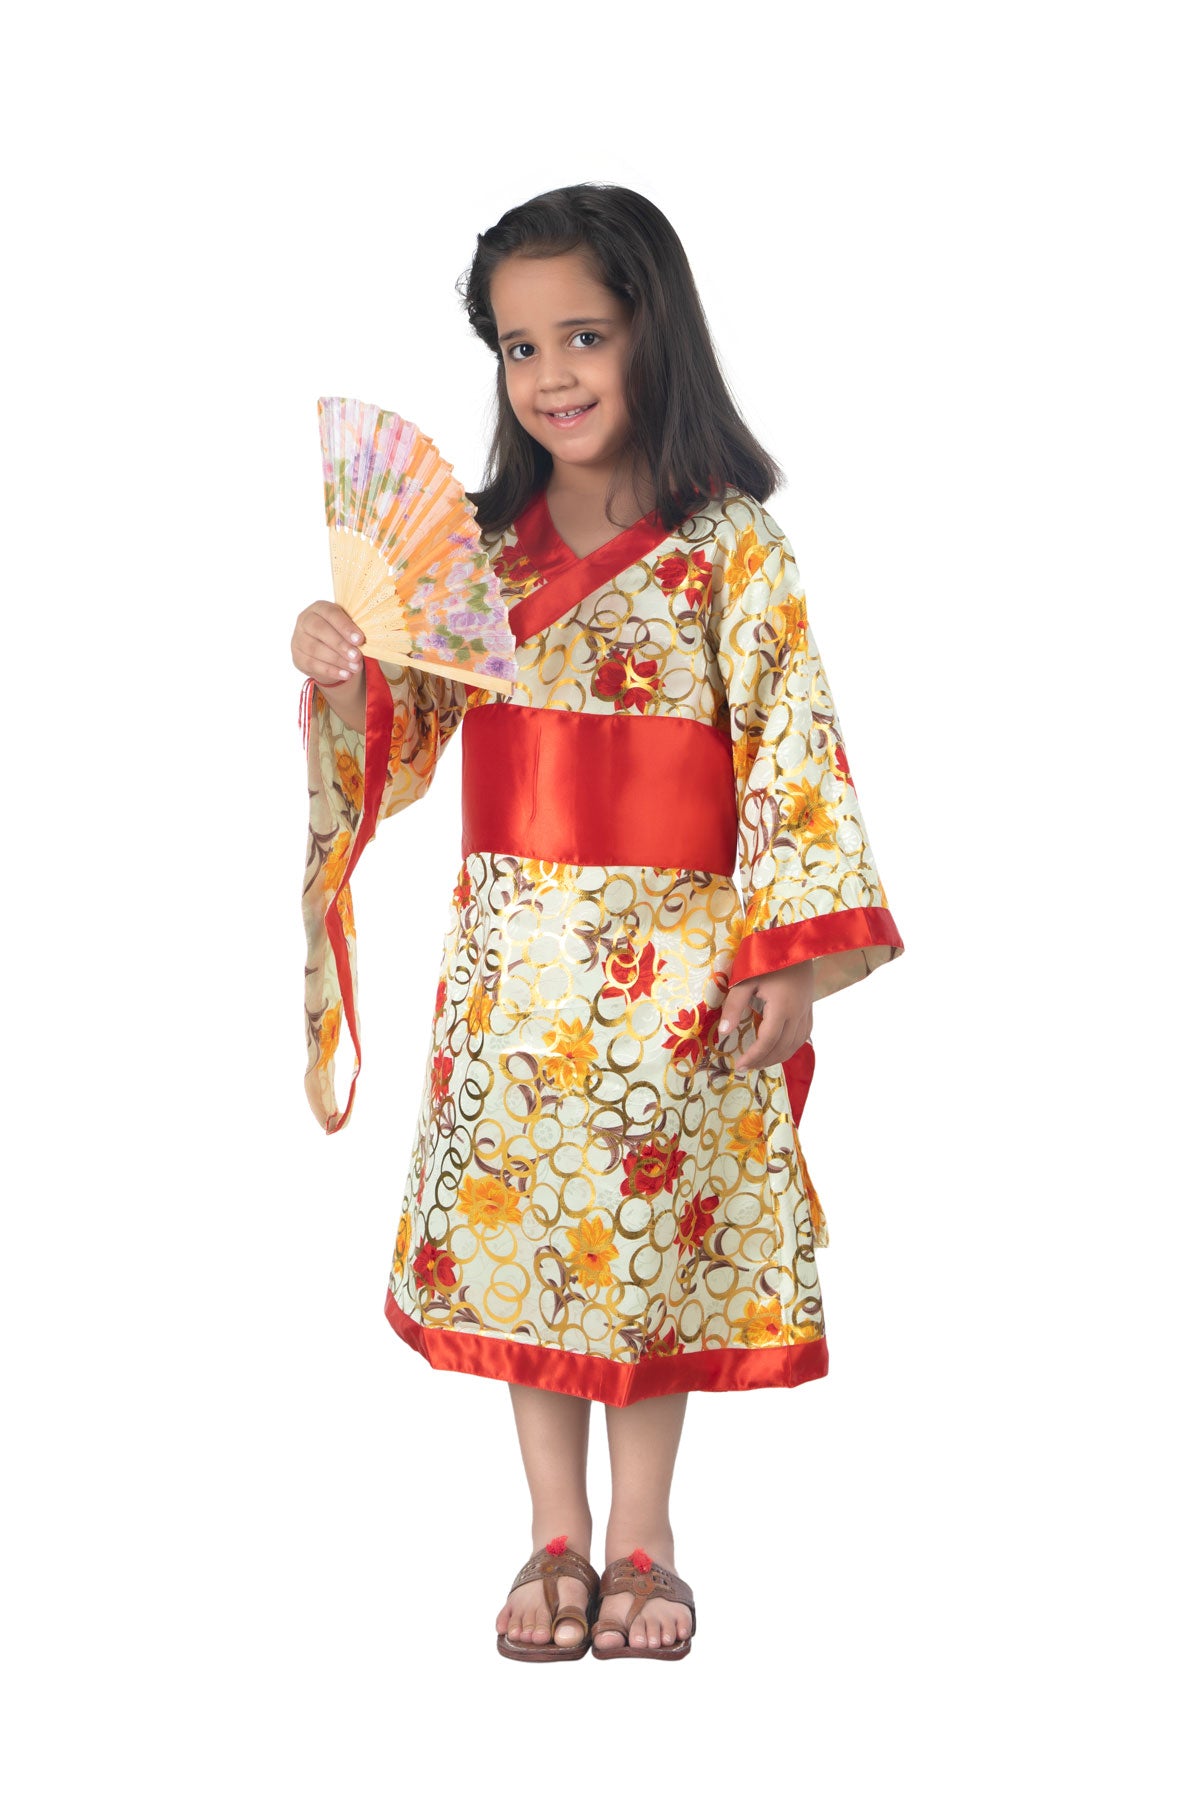 Children's Fancy Dress | Kids' Costumes | Party Delights